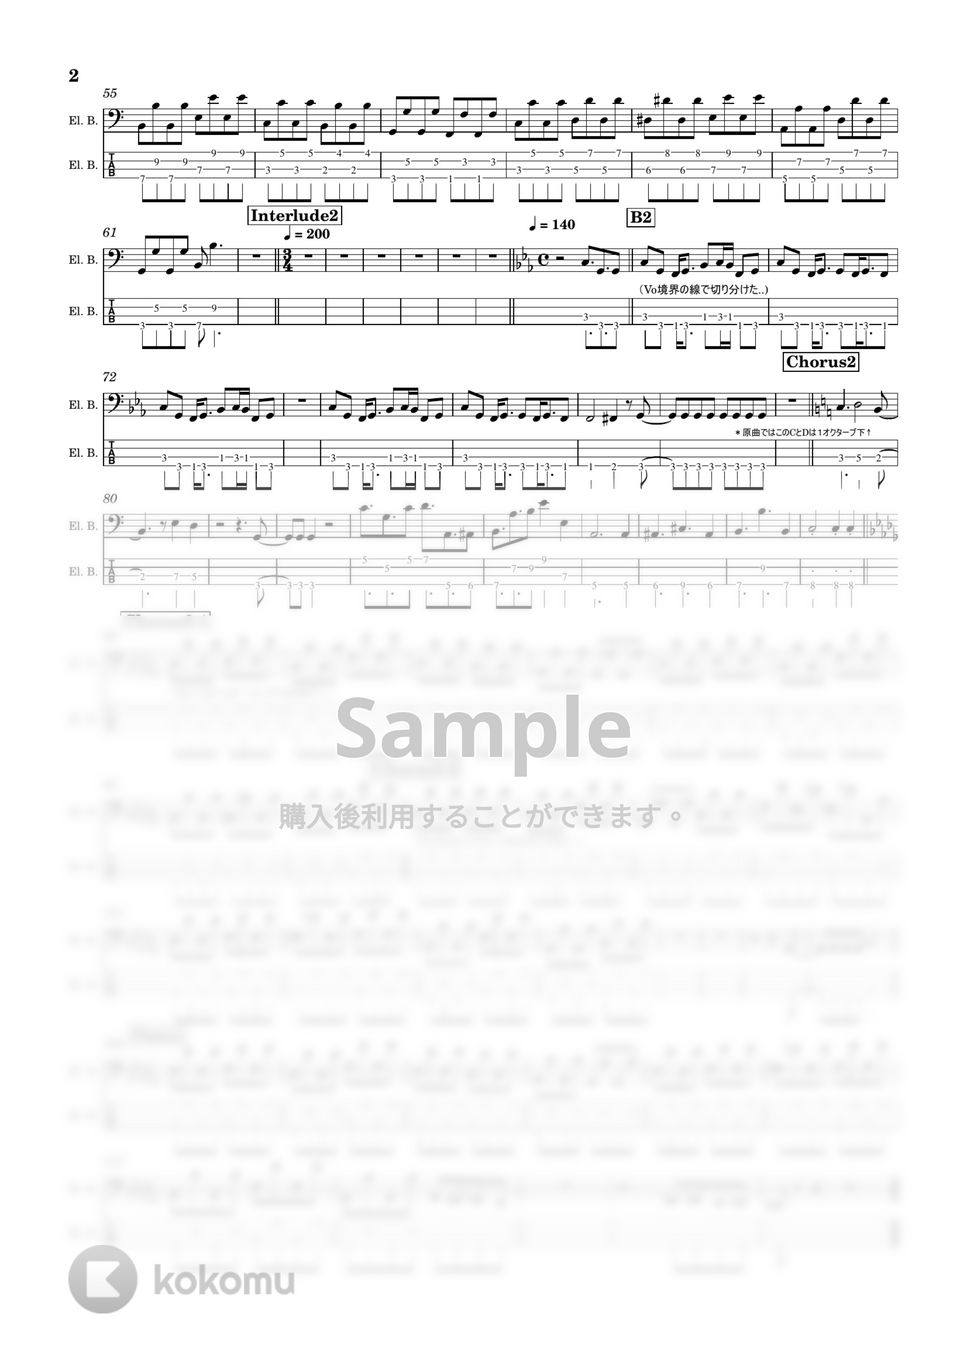 YOASOBI - セブンティーン(４弦Ver.) (ベース/TAB/YOASOBI/セブンティーン) by TARUO's_Bass_Score